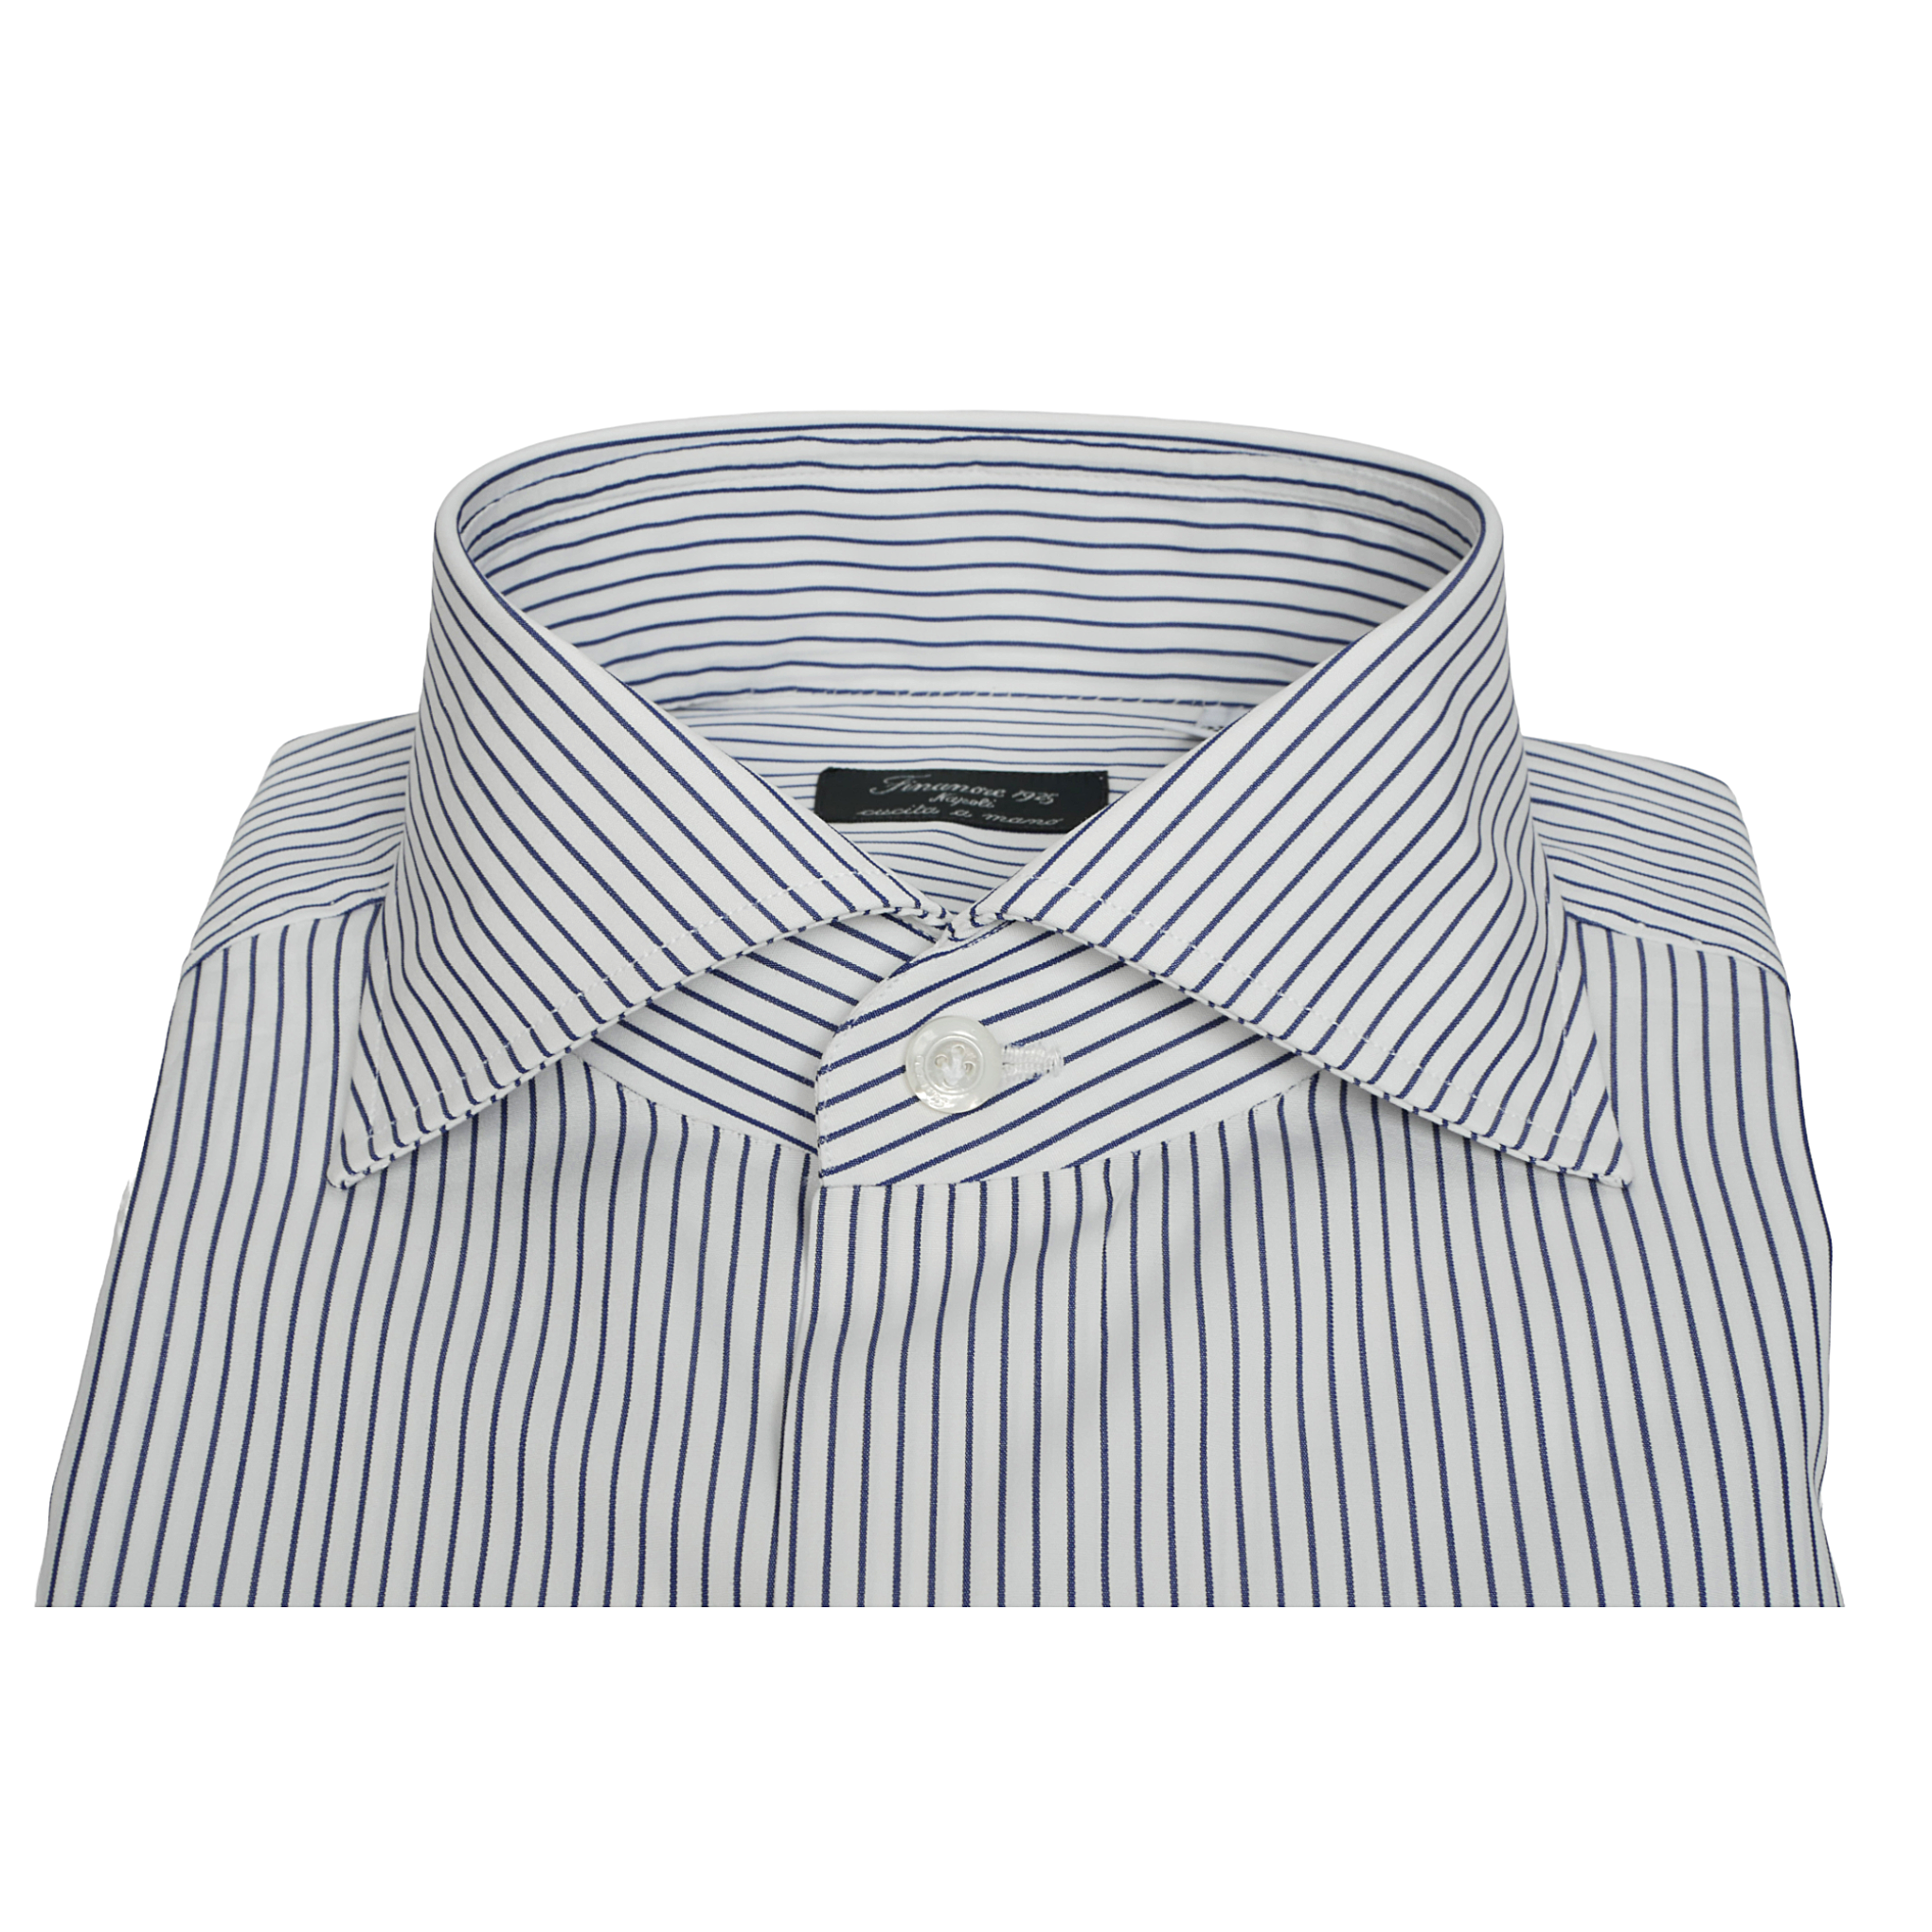 Napoli regular dress shirt in light blue or blue striped cotton popeline